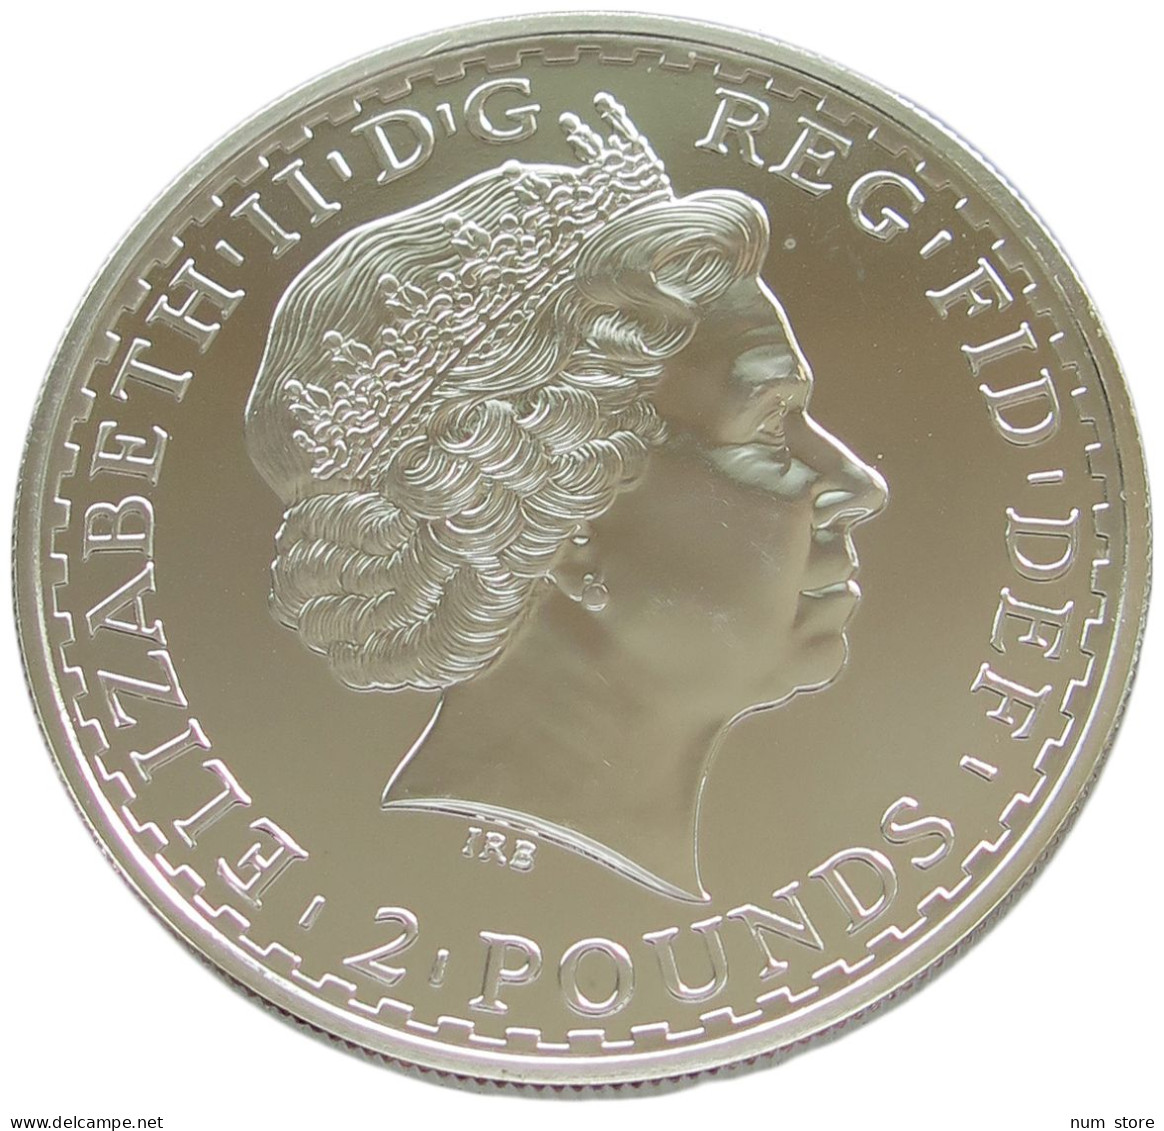 GREAT BRITAIN 2 POUNDS 2007 Elisabeth II. (1952-) #w029 0703 - 2 Pond